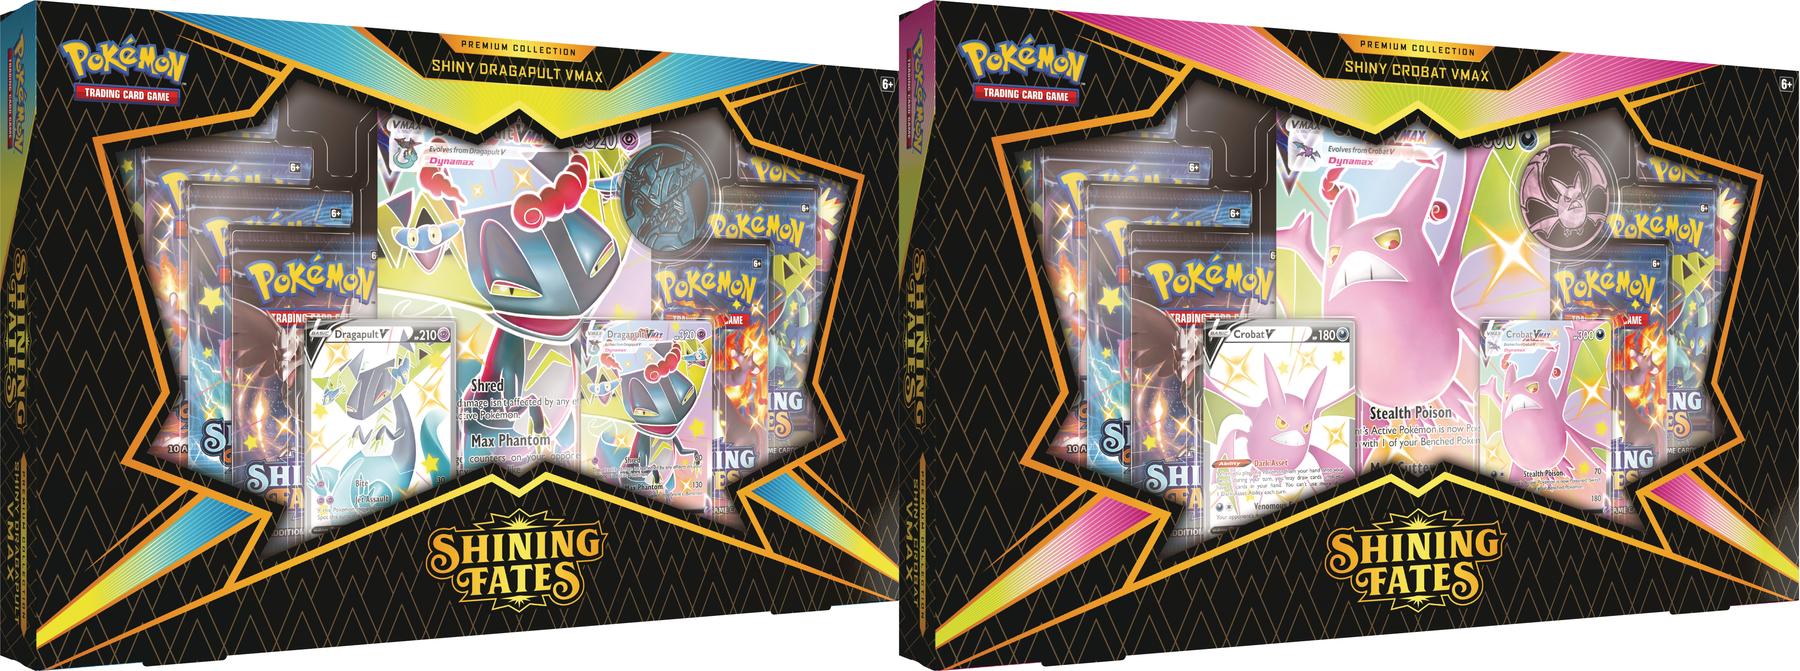 Shiny Crobat or Dragapult, 73 Cards Pokémon TCG: Shining Fates Premium Collection Set for sale online 2021 